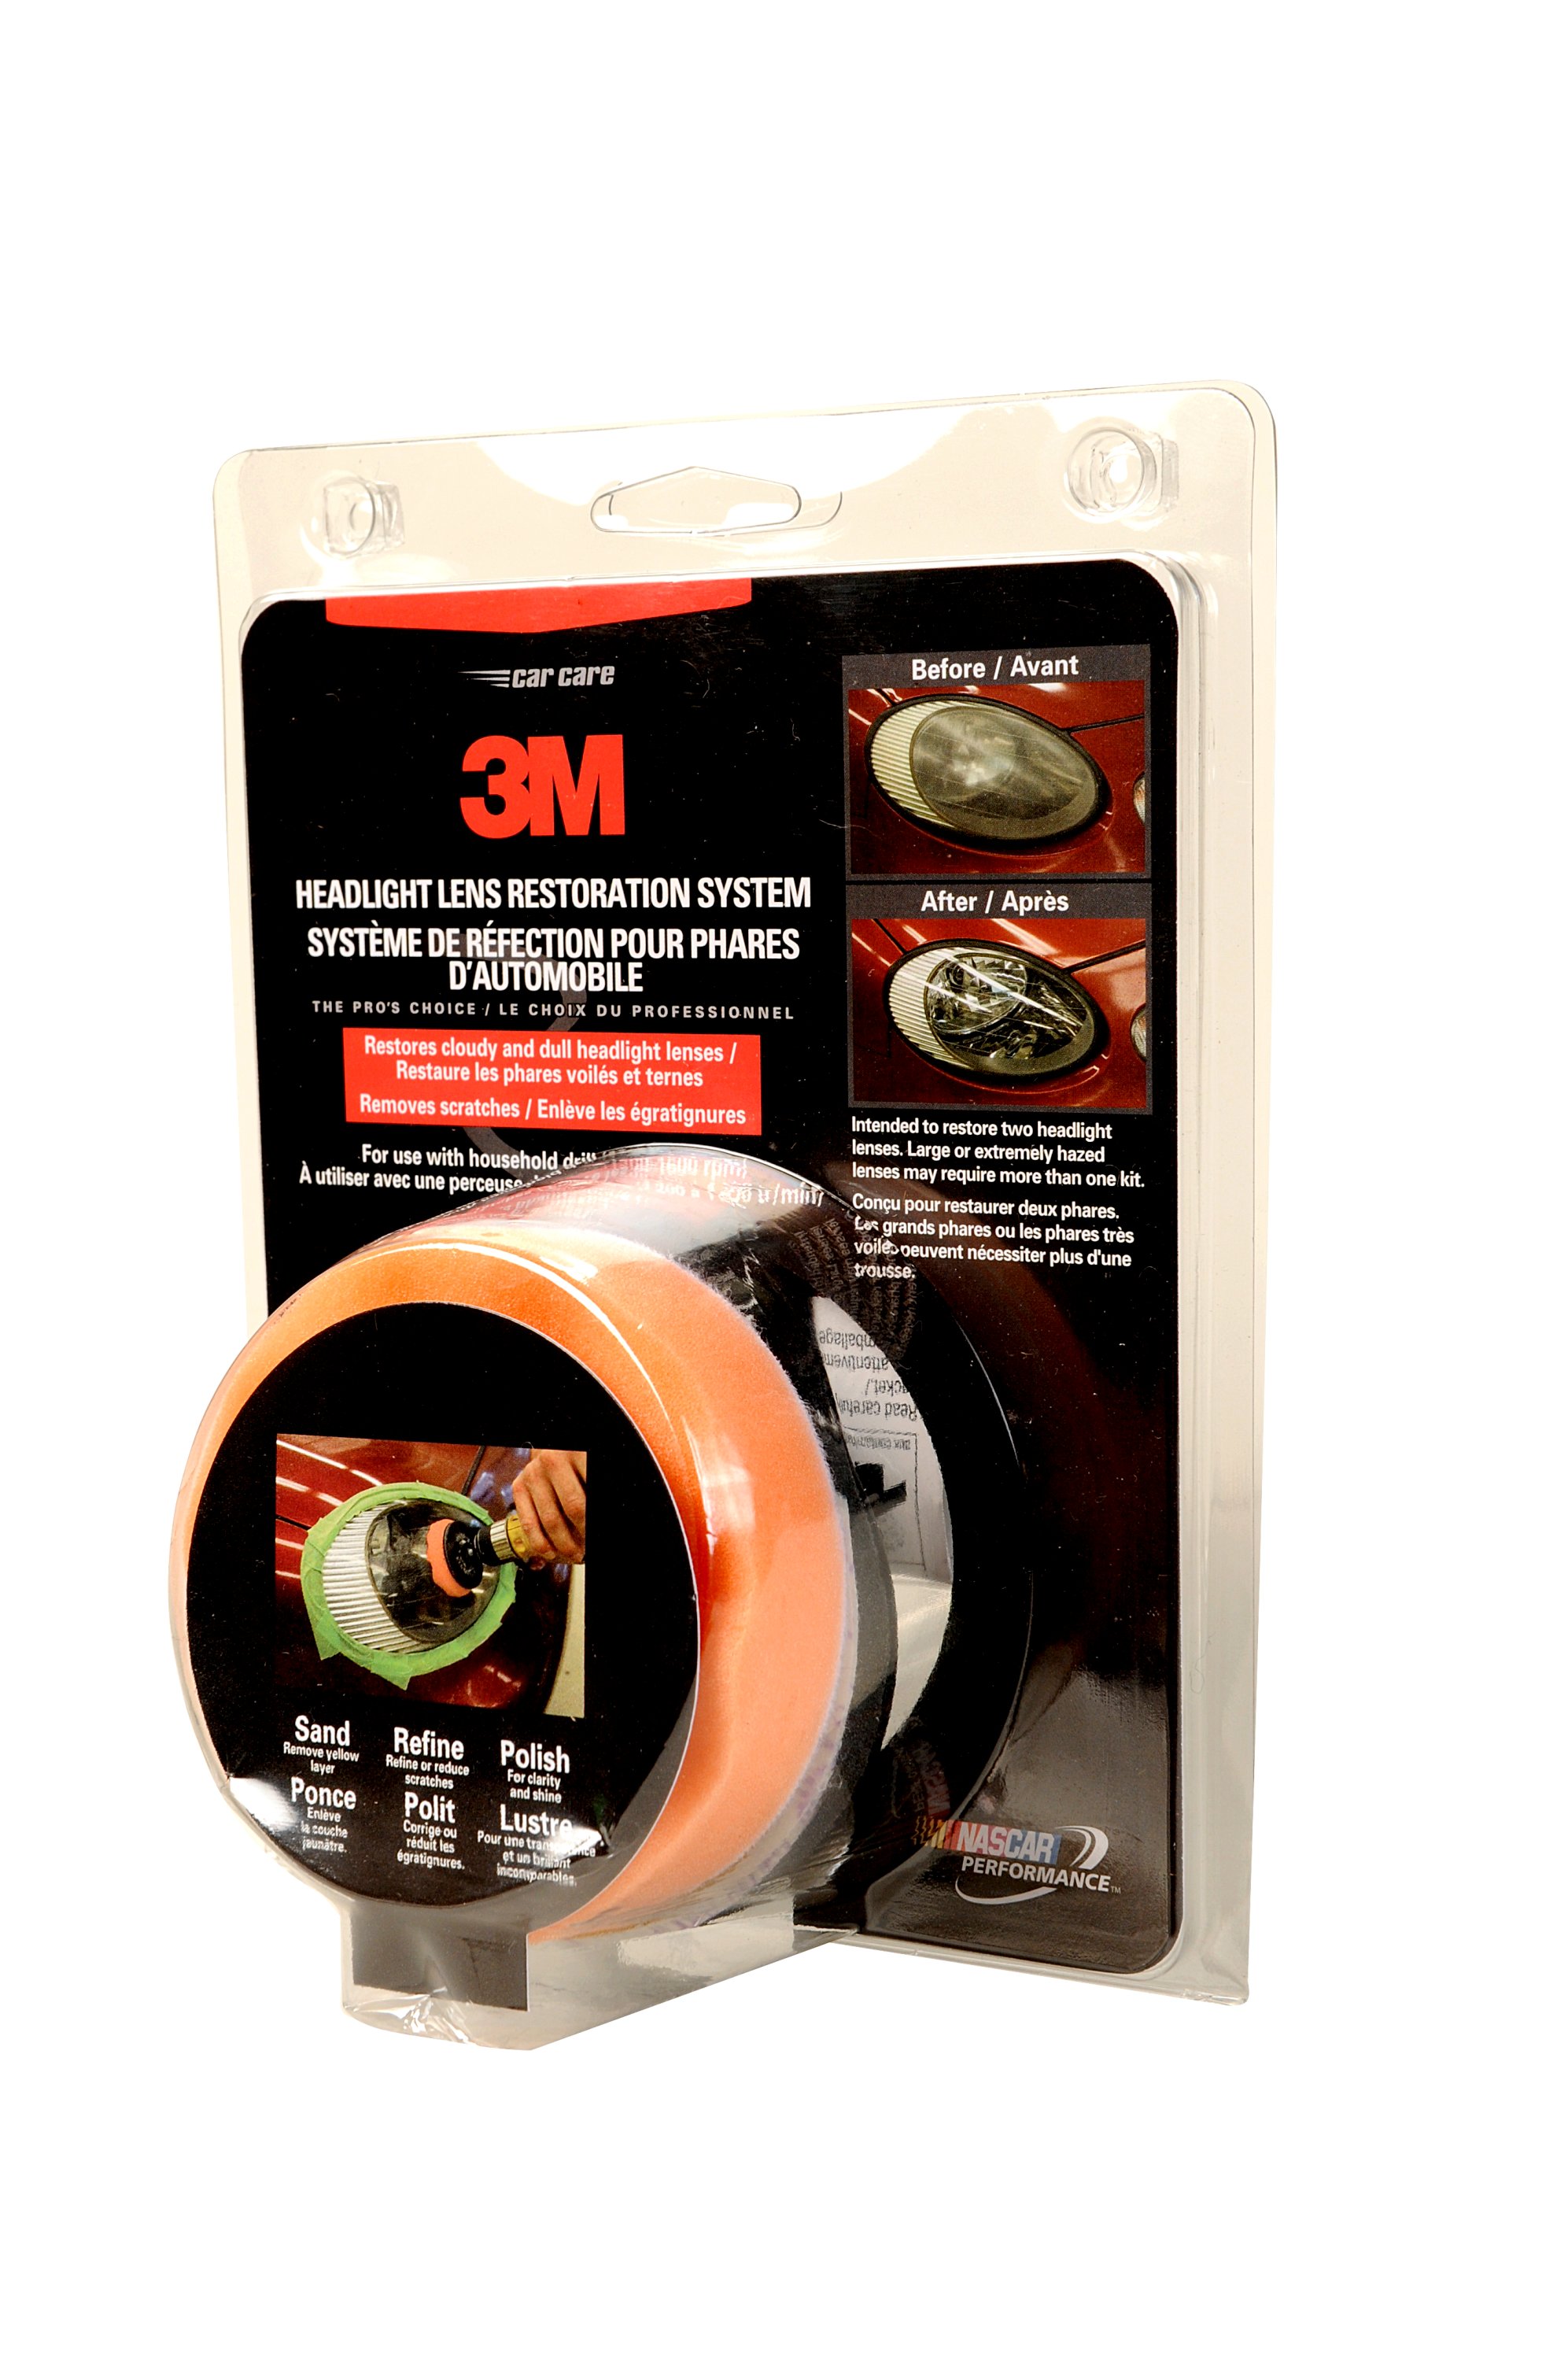 3M Headlight Lens Restoration System - image 5 of 17